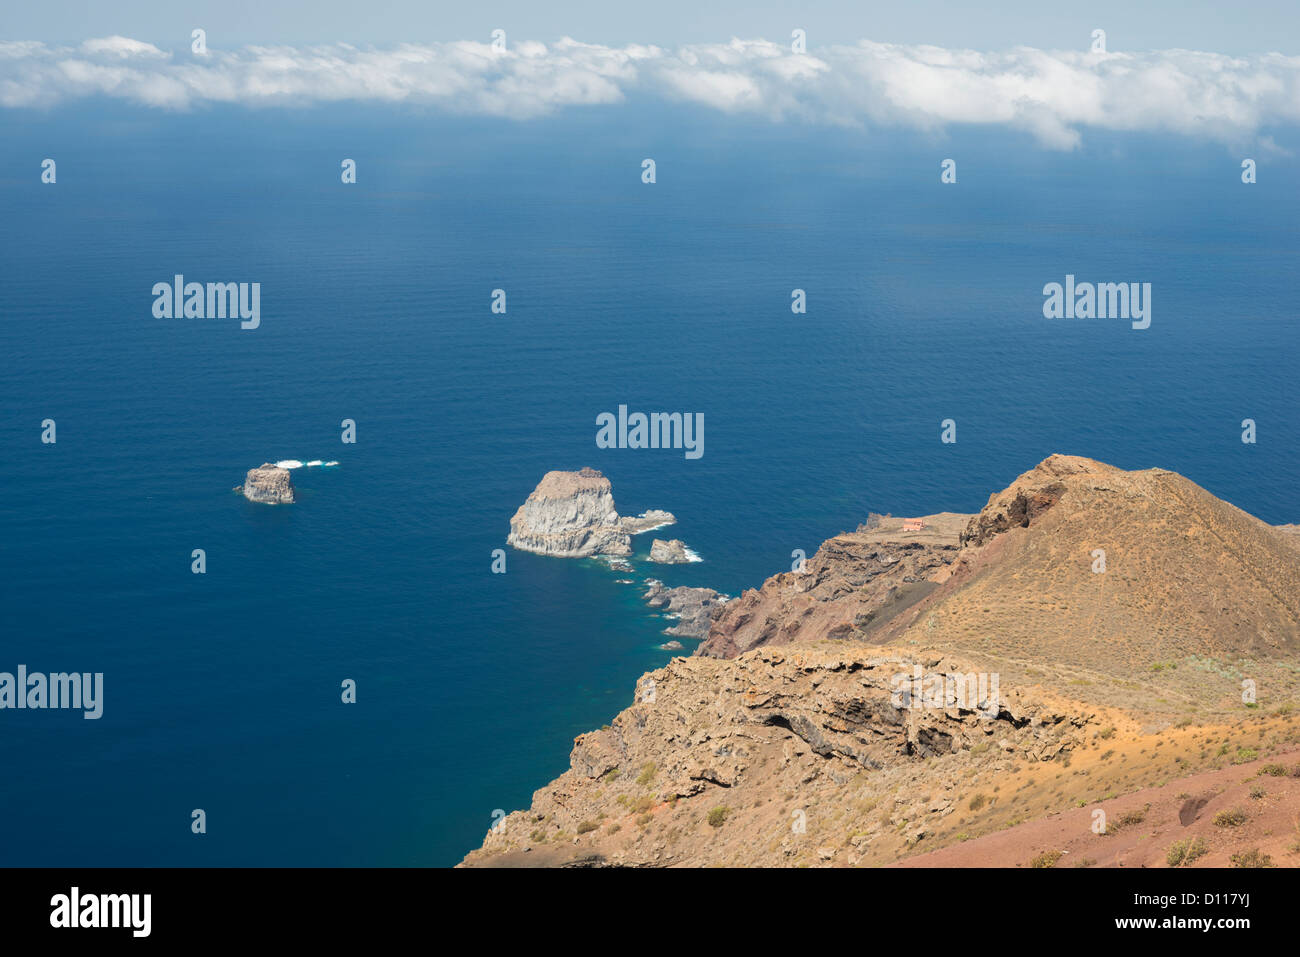 View from Mirador de la Pena on the cliff-top of the El Golfo embayment over the Roques de Salmor, El Hierro, Canary Islands Stock Photo